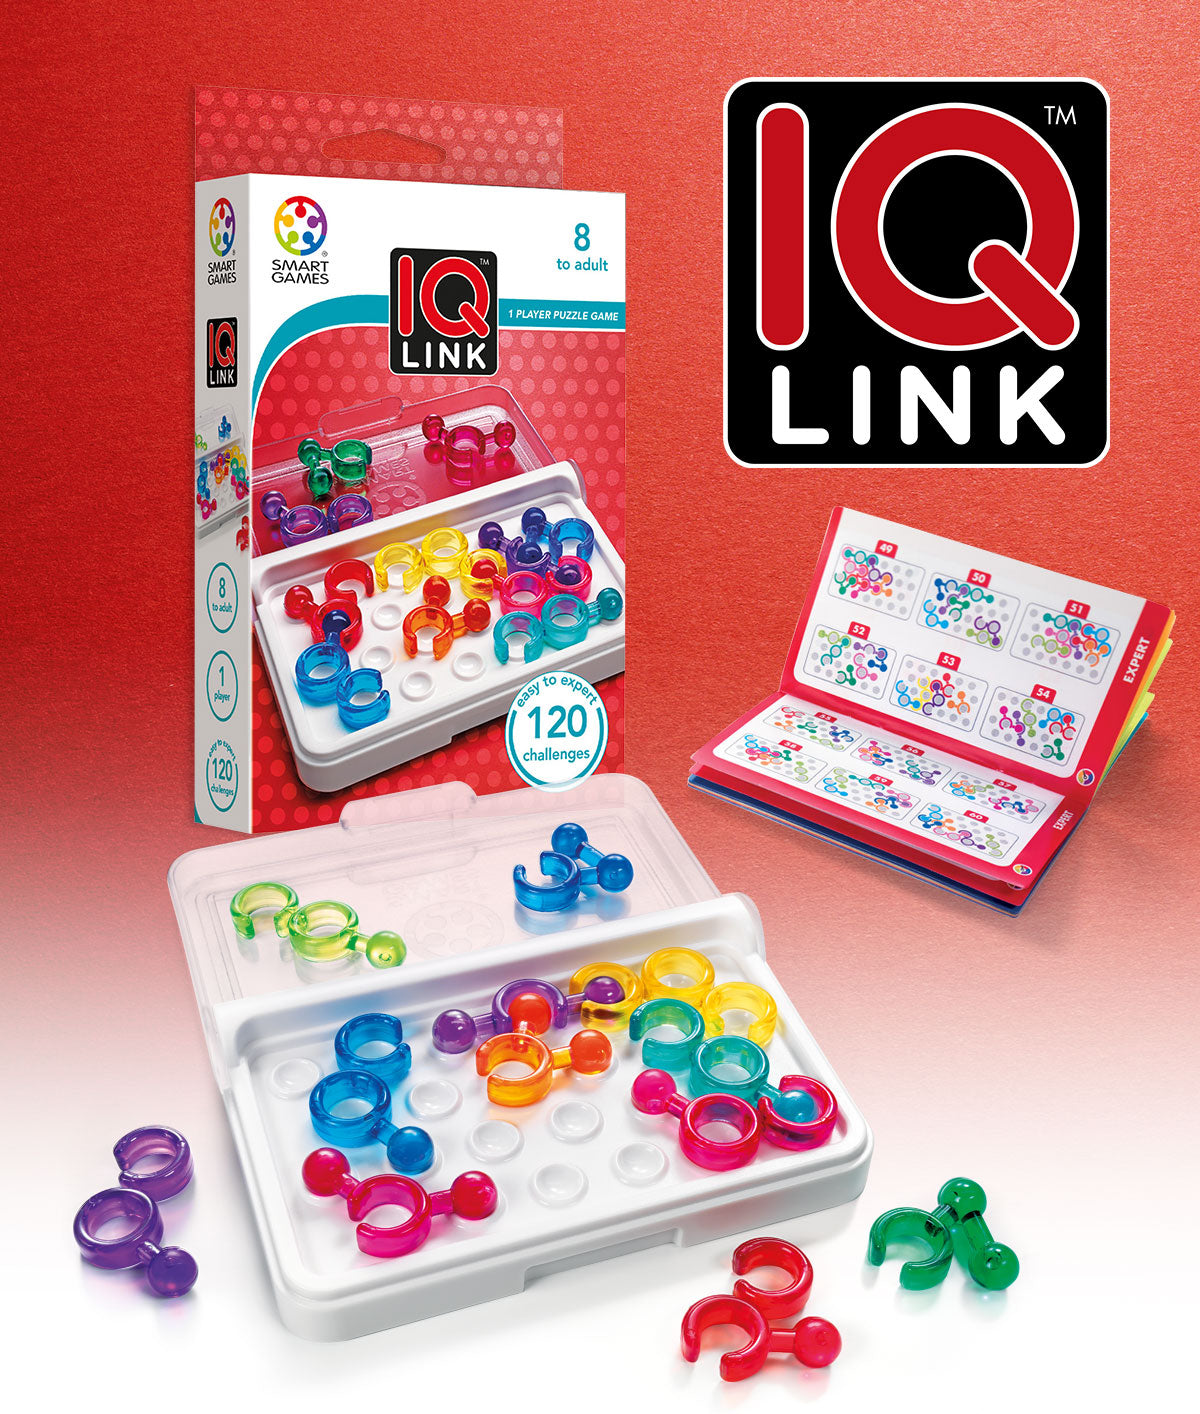 IQ Link - Smart Games